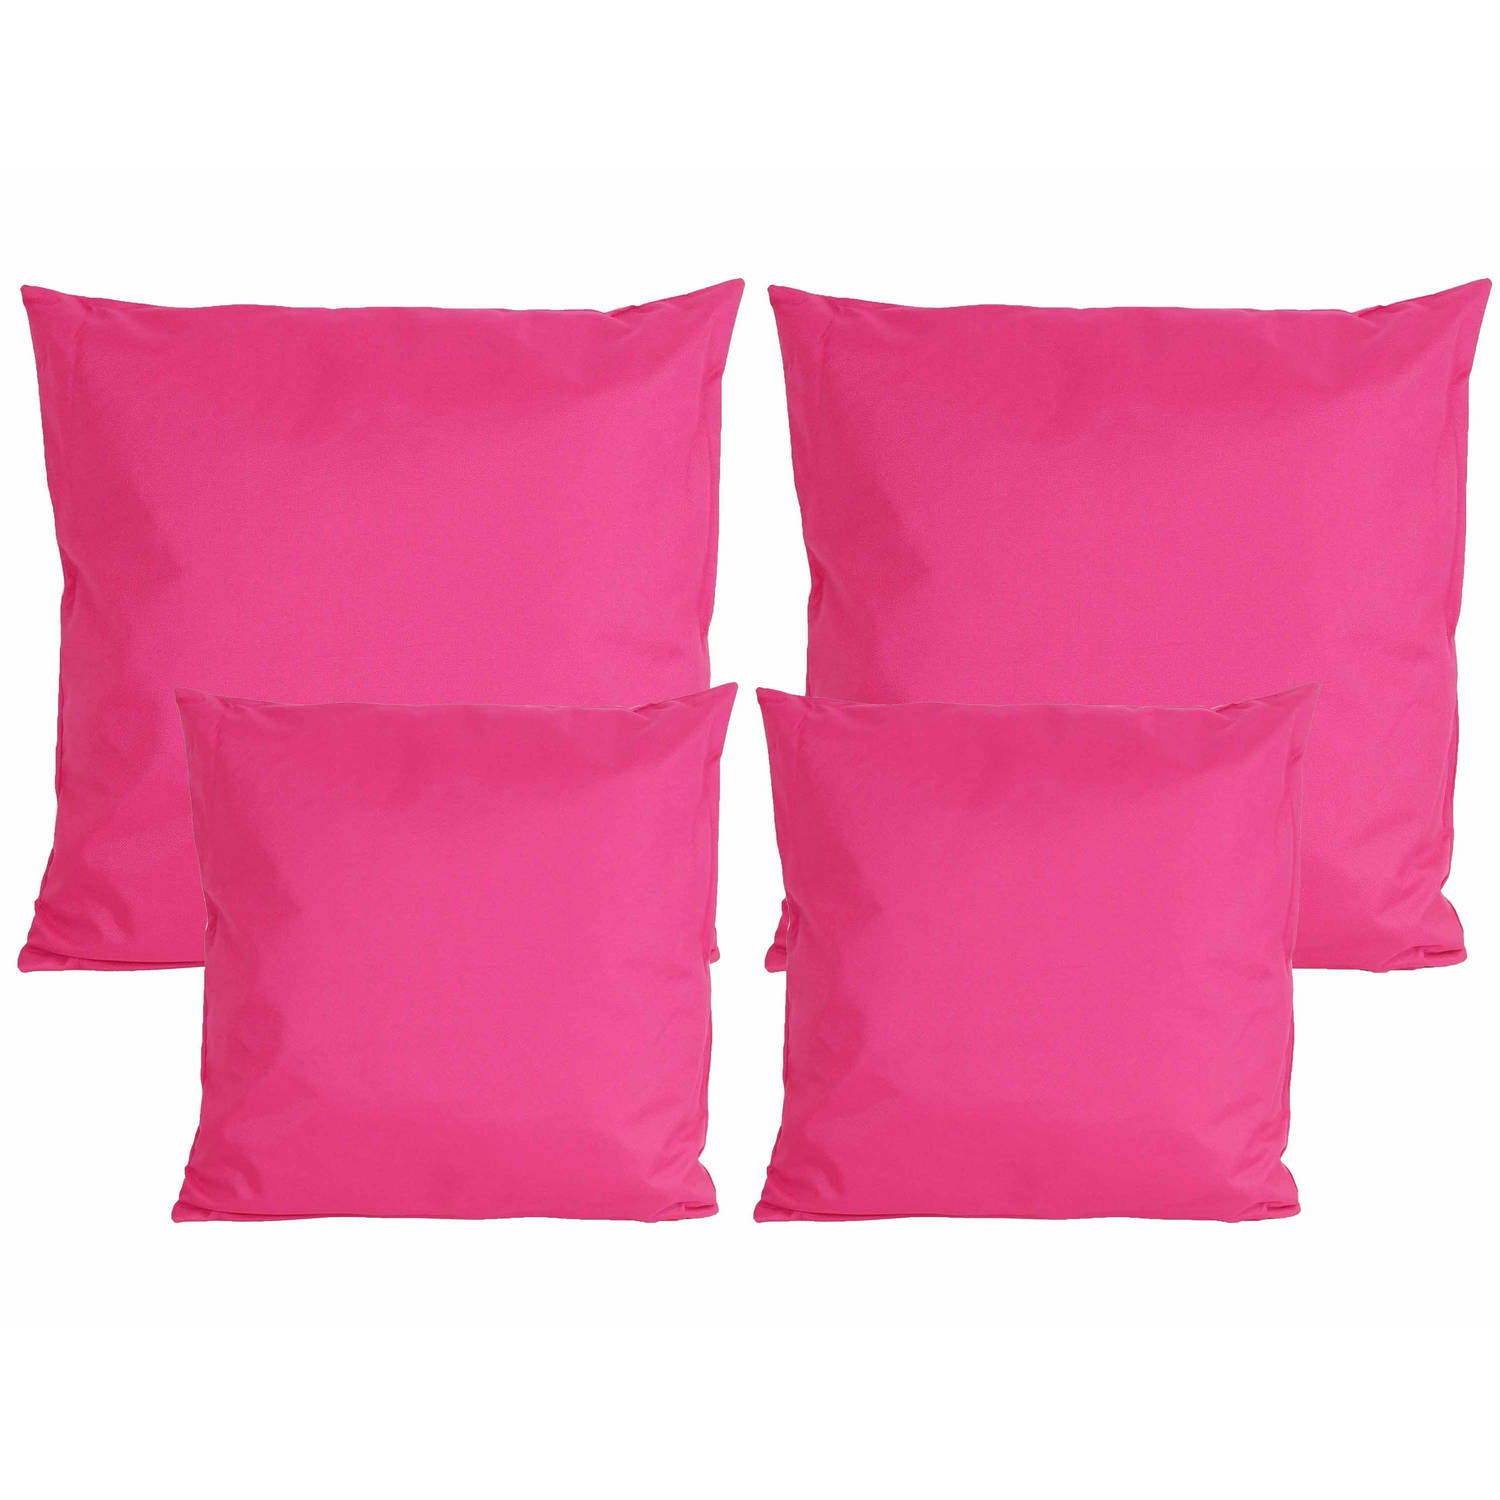 Bank-tuin kussens set binnen-buiten 4x stuks fuchsia roze In 2 formaten Sierkussens